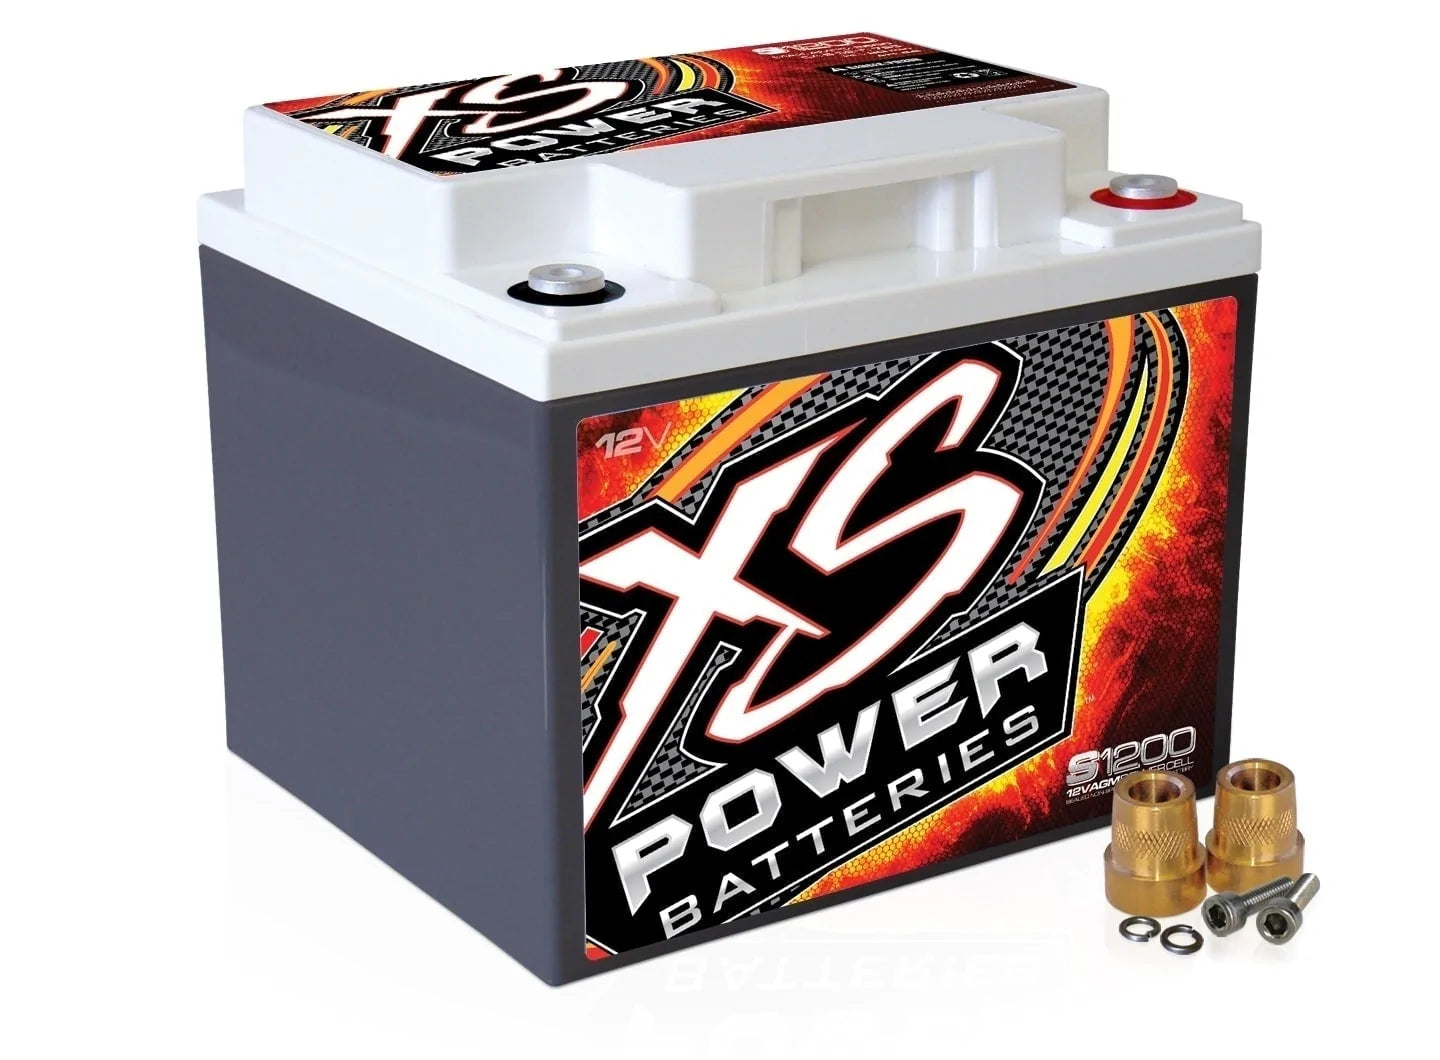 S1200 XS Power 12VDC AGM Racing Vehicle Battery 2600A 44Ah